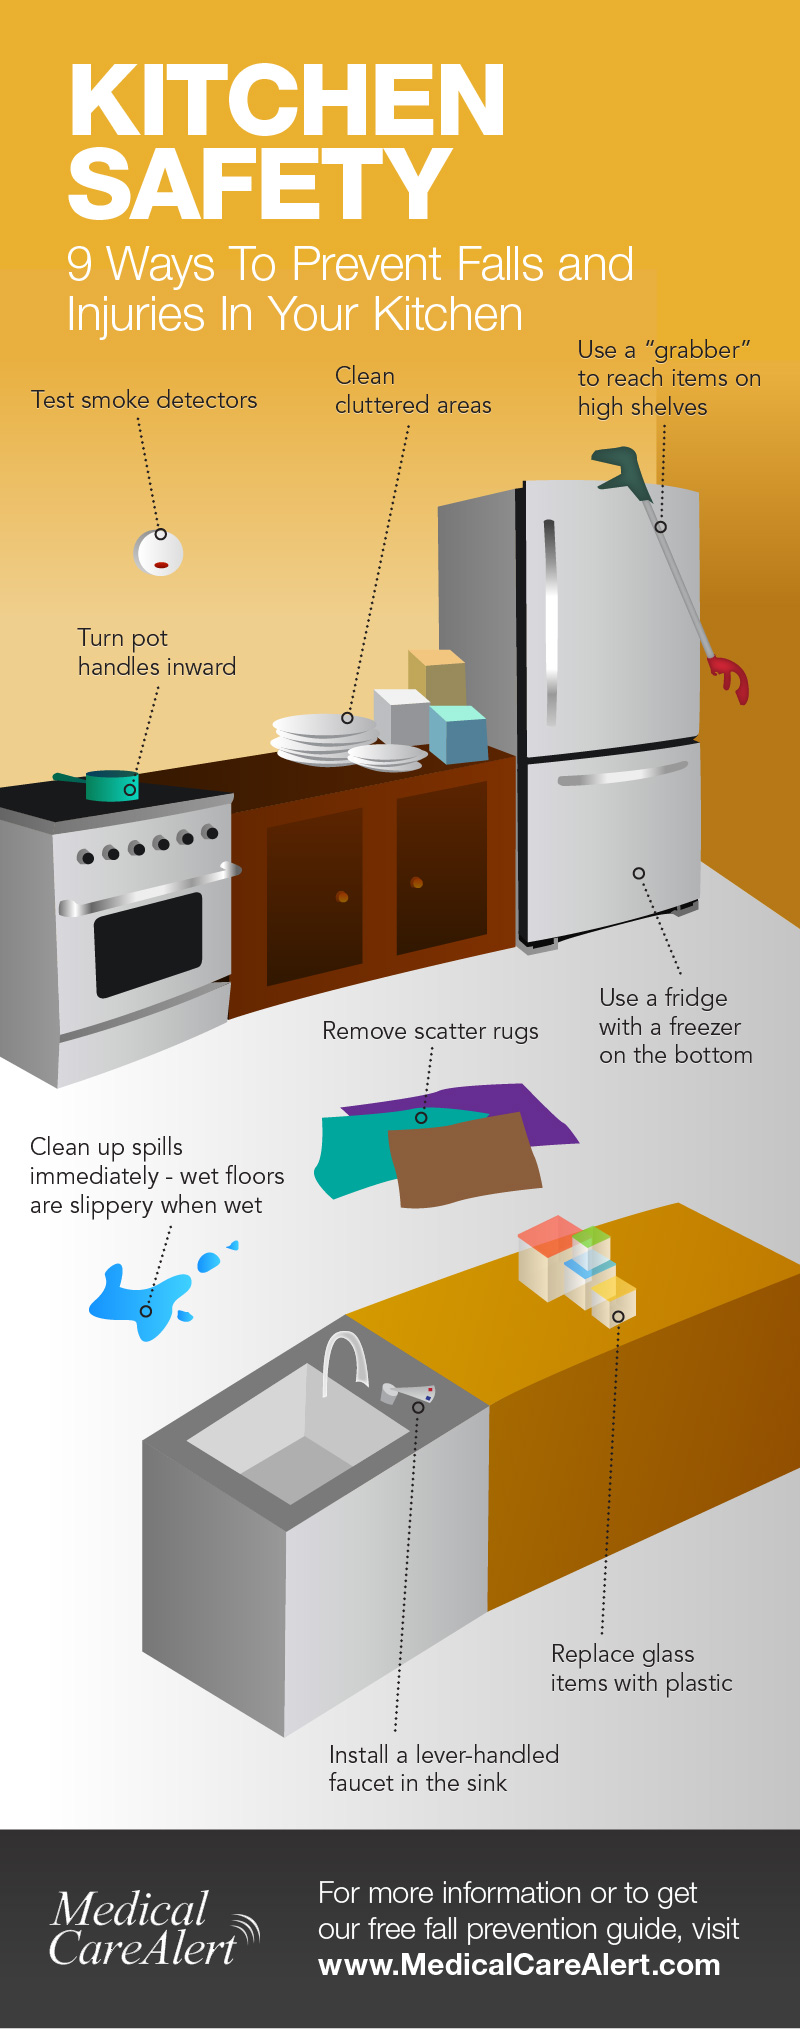 kitchen safety for seniors infographic